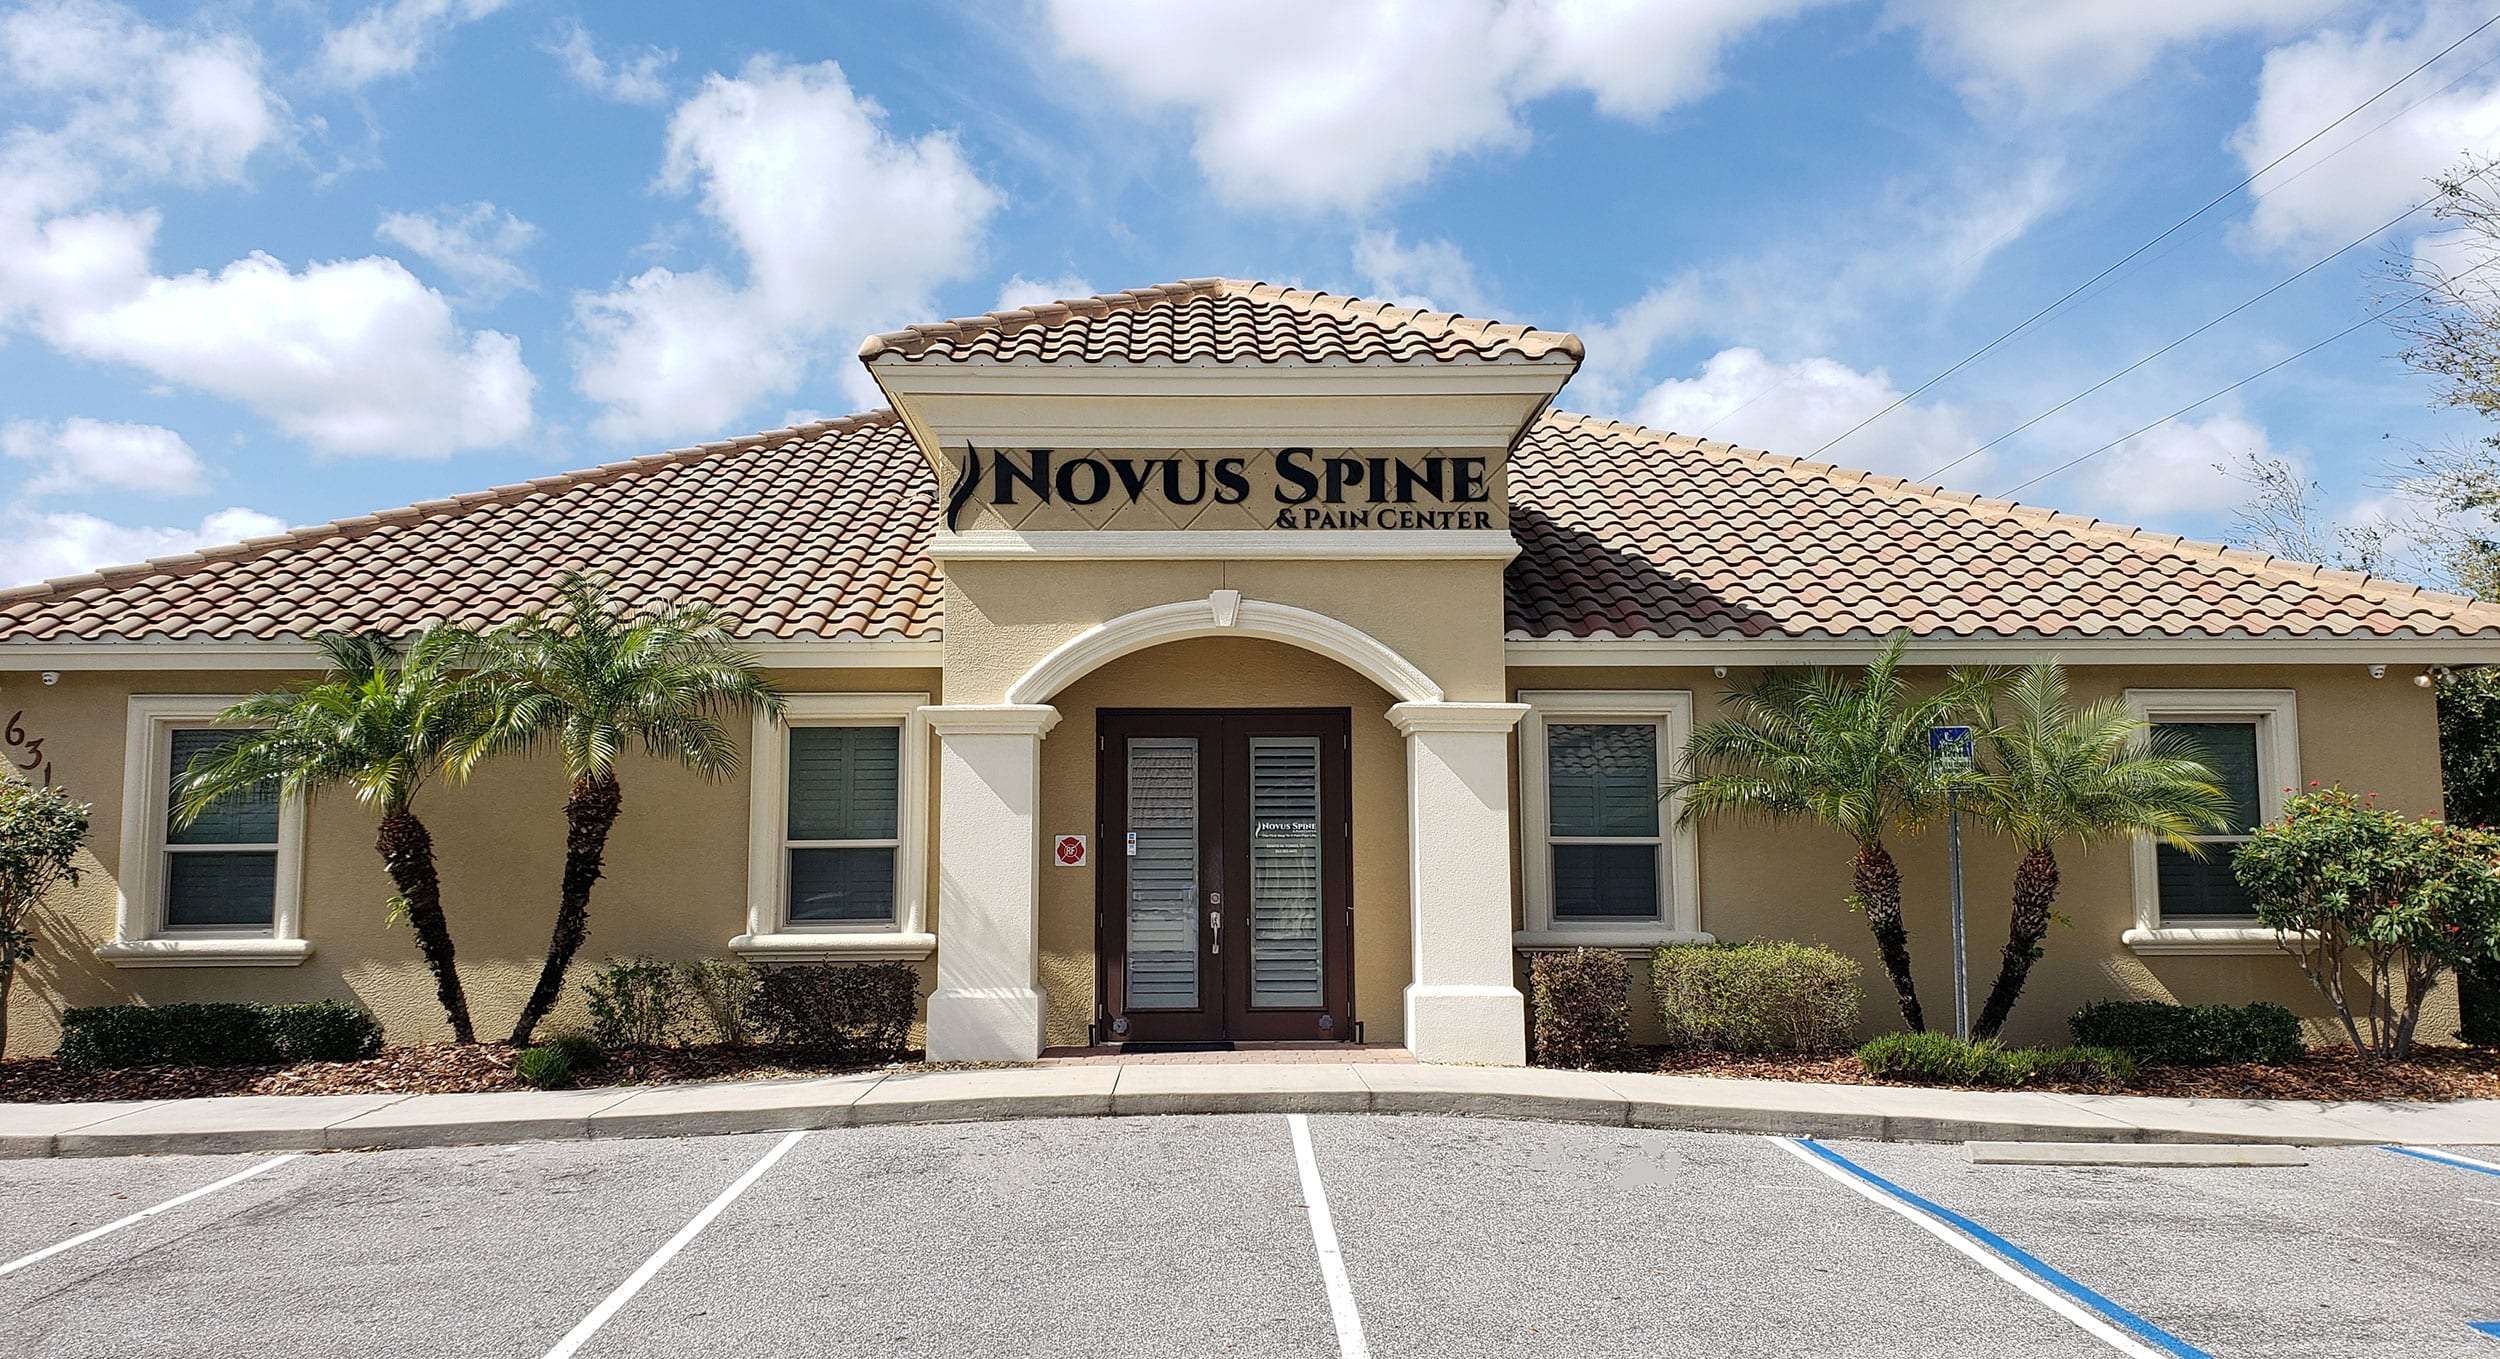 Novus Spine & Pain Center exterior